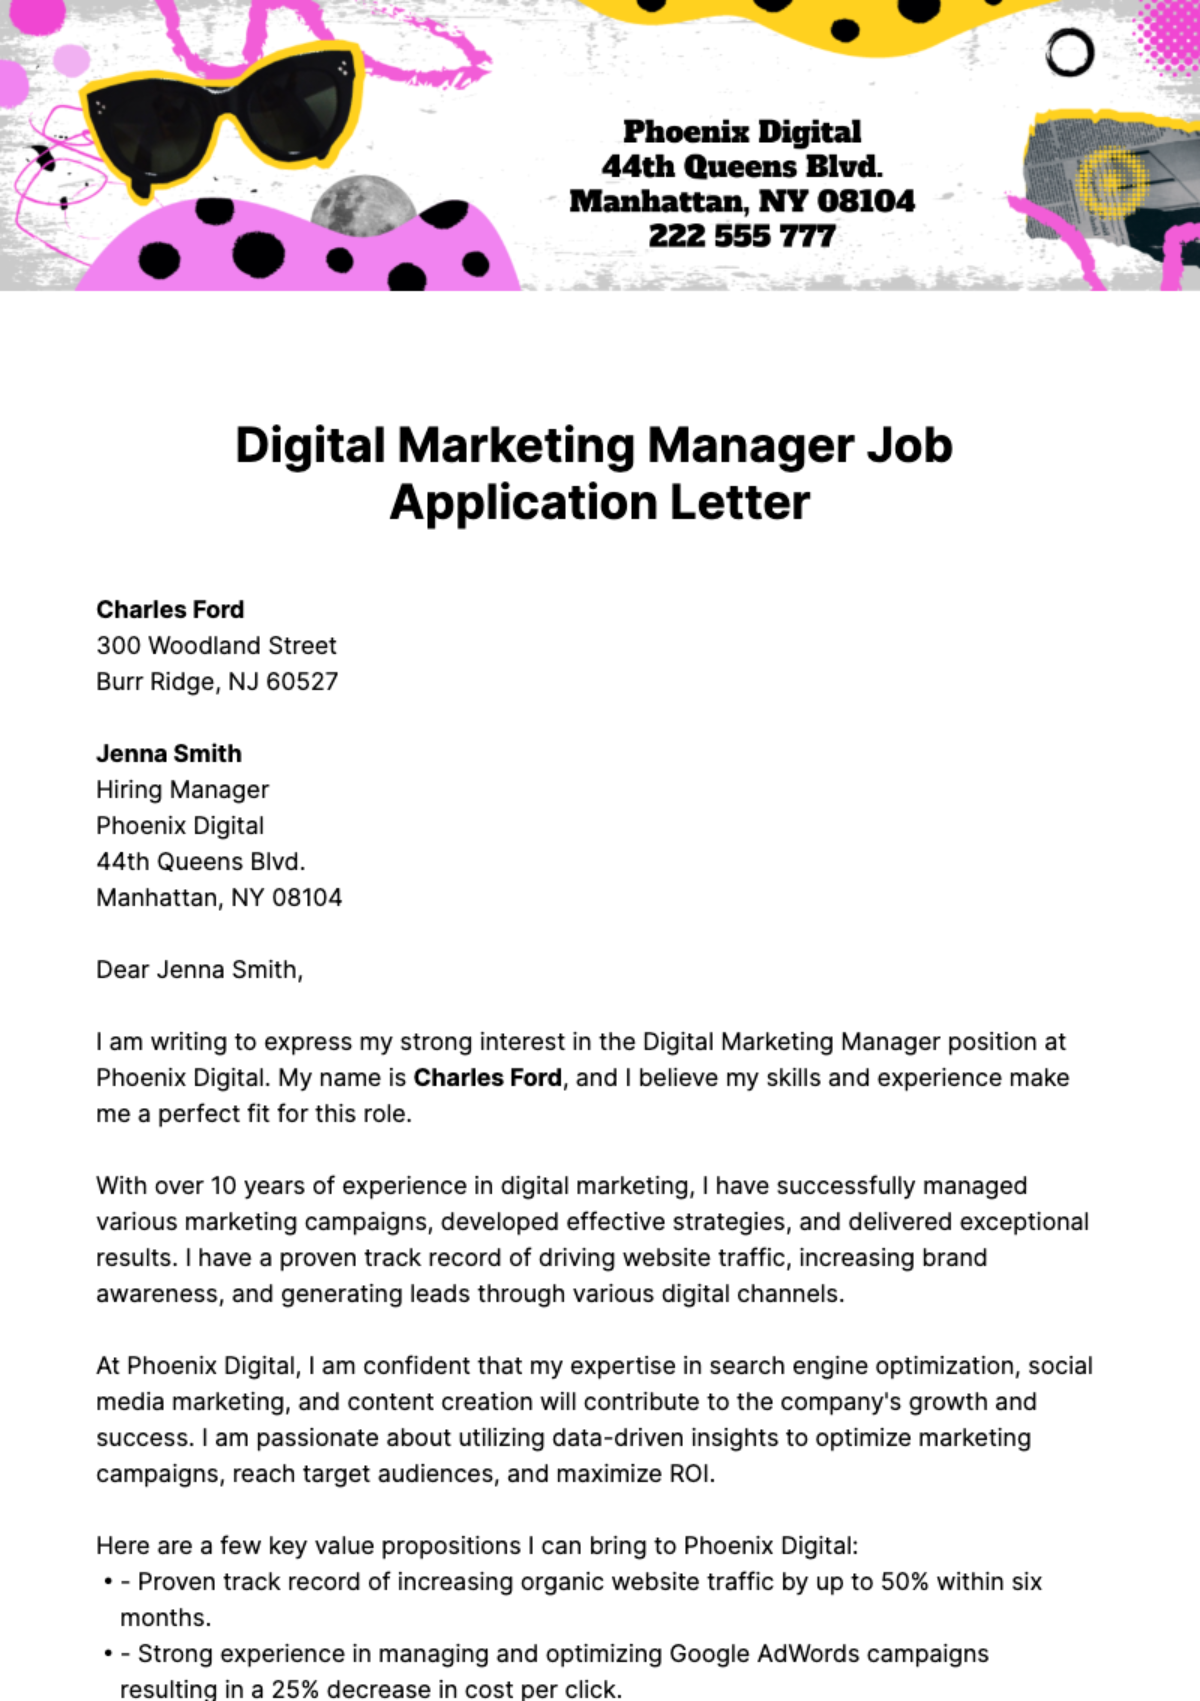 Digital Marketing Manager Job Application Letter  Template